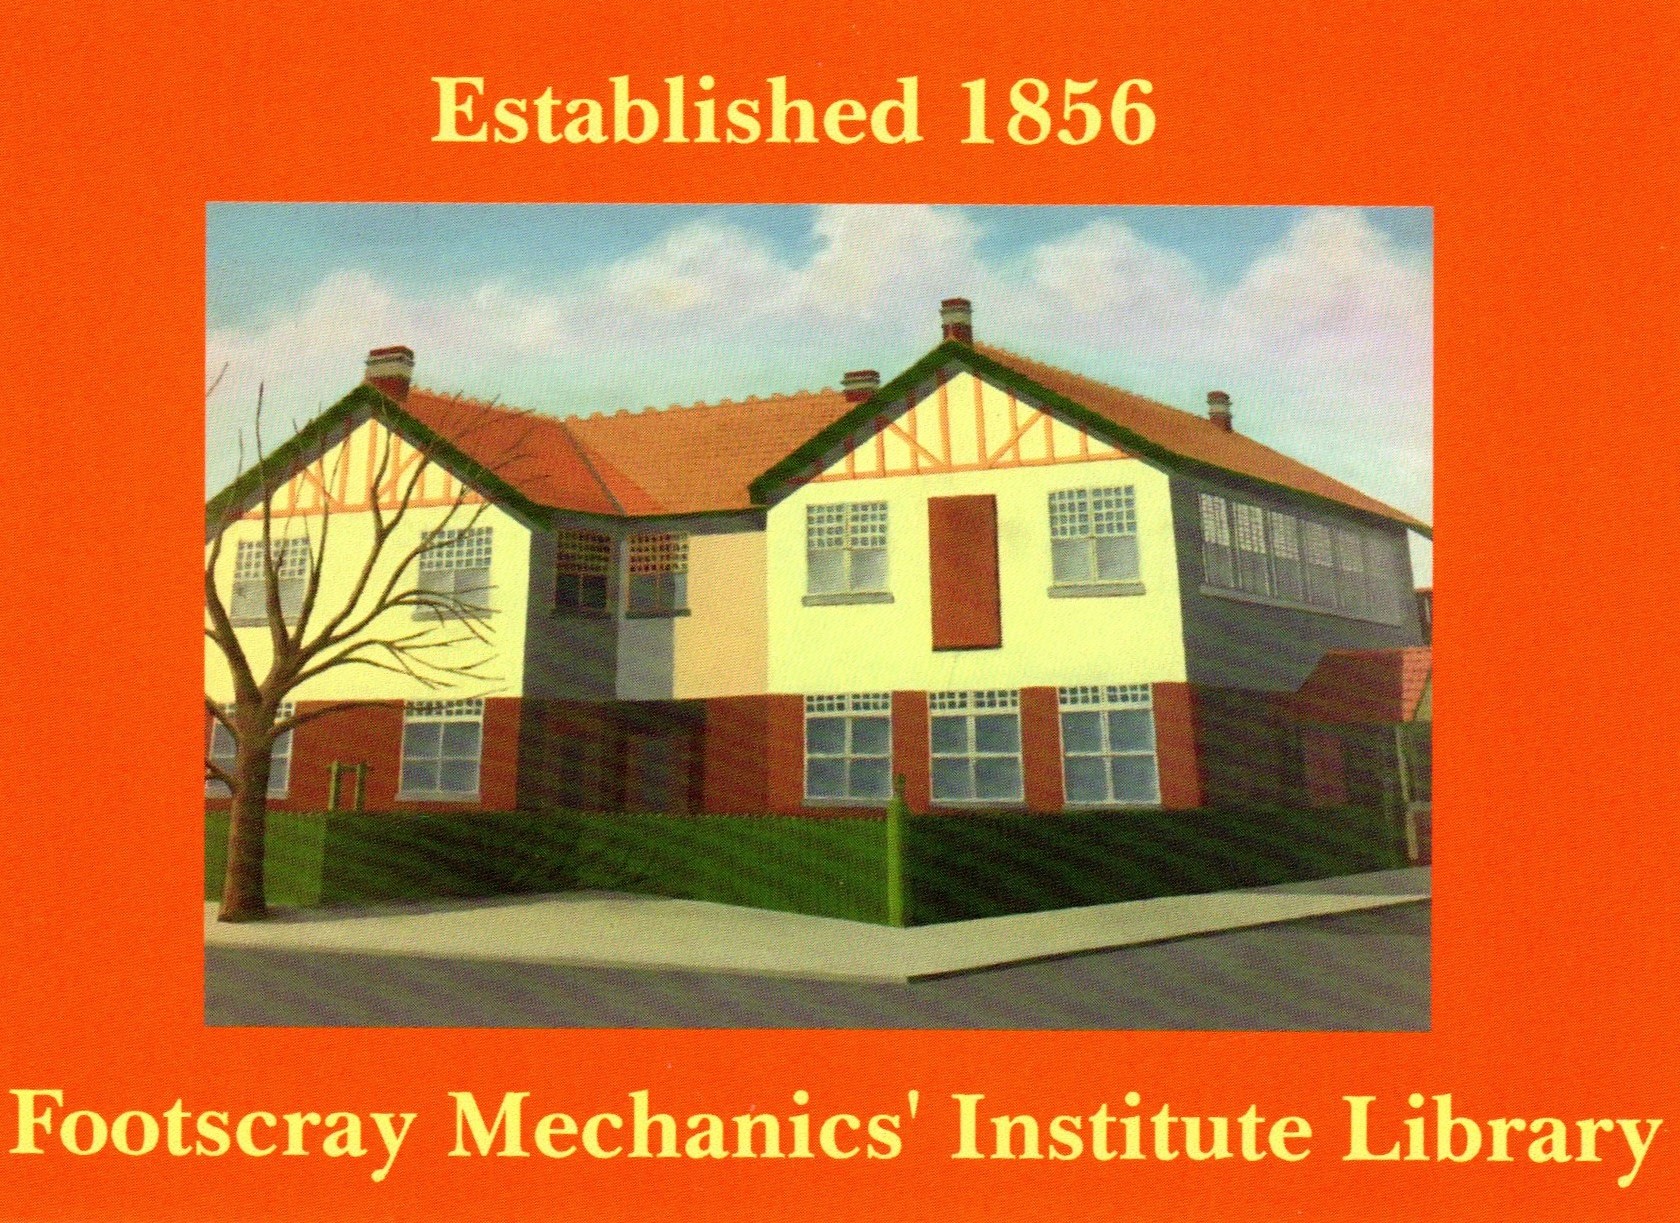 Footscray Mechanics' Institute